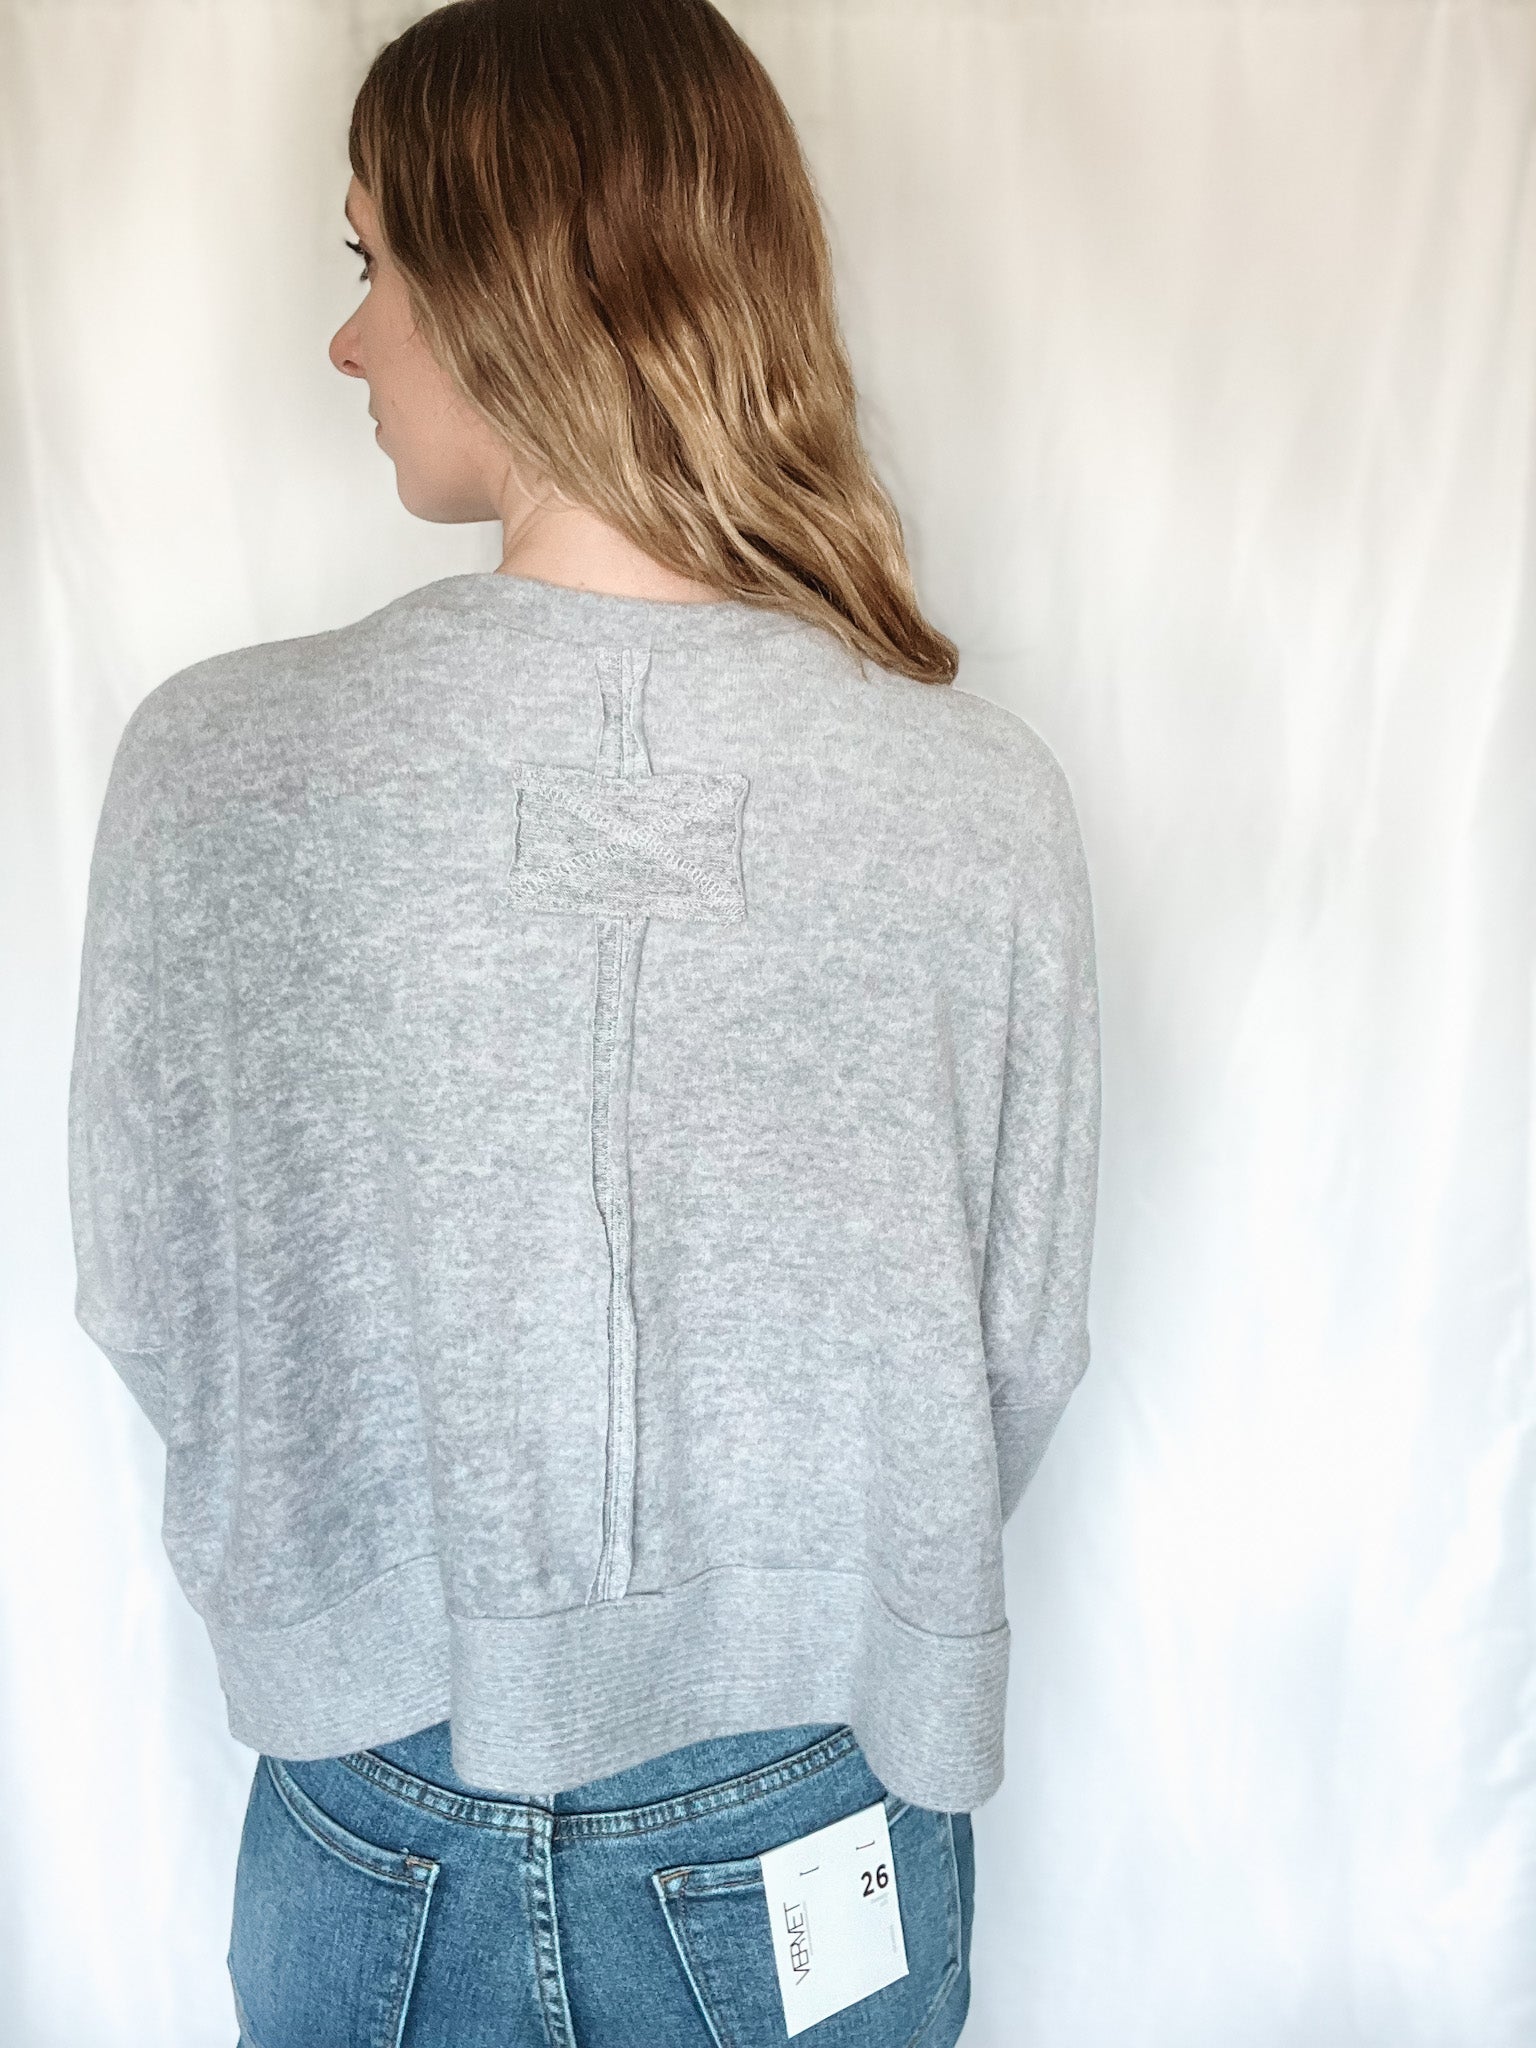 Soft Like Butter Dolman Sweater in Gray - Raising Brave